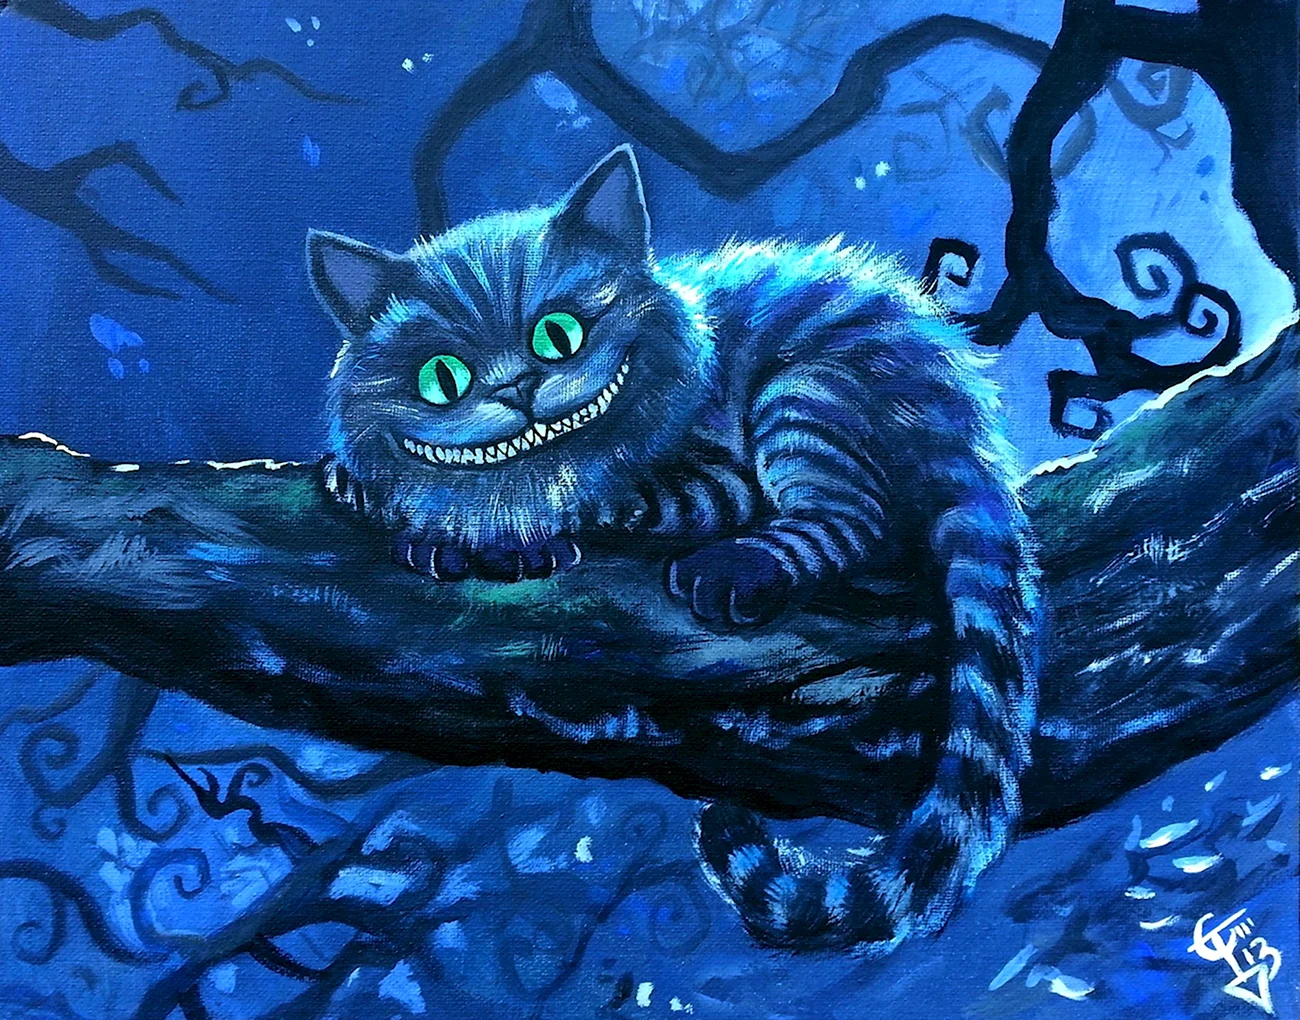 Алиса в стране чудес Чеширский кот. Картинка